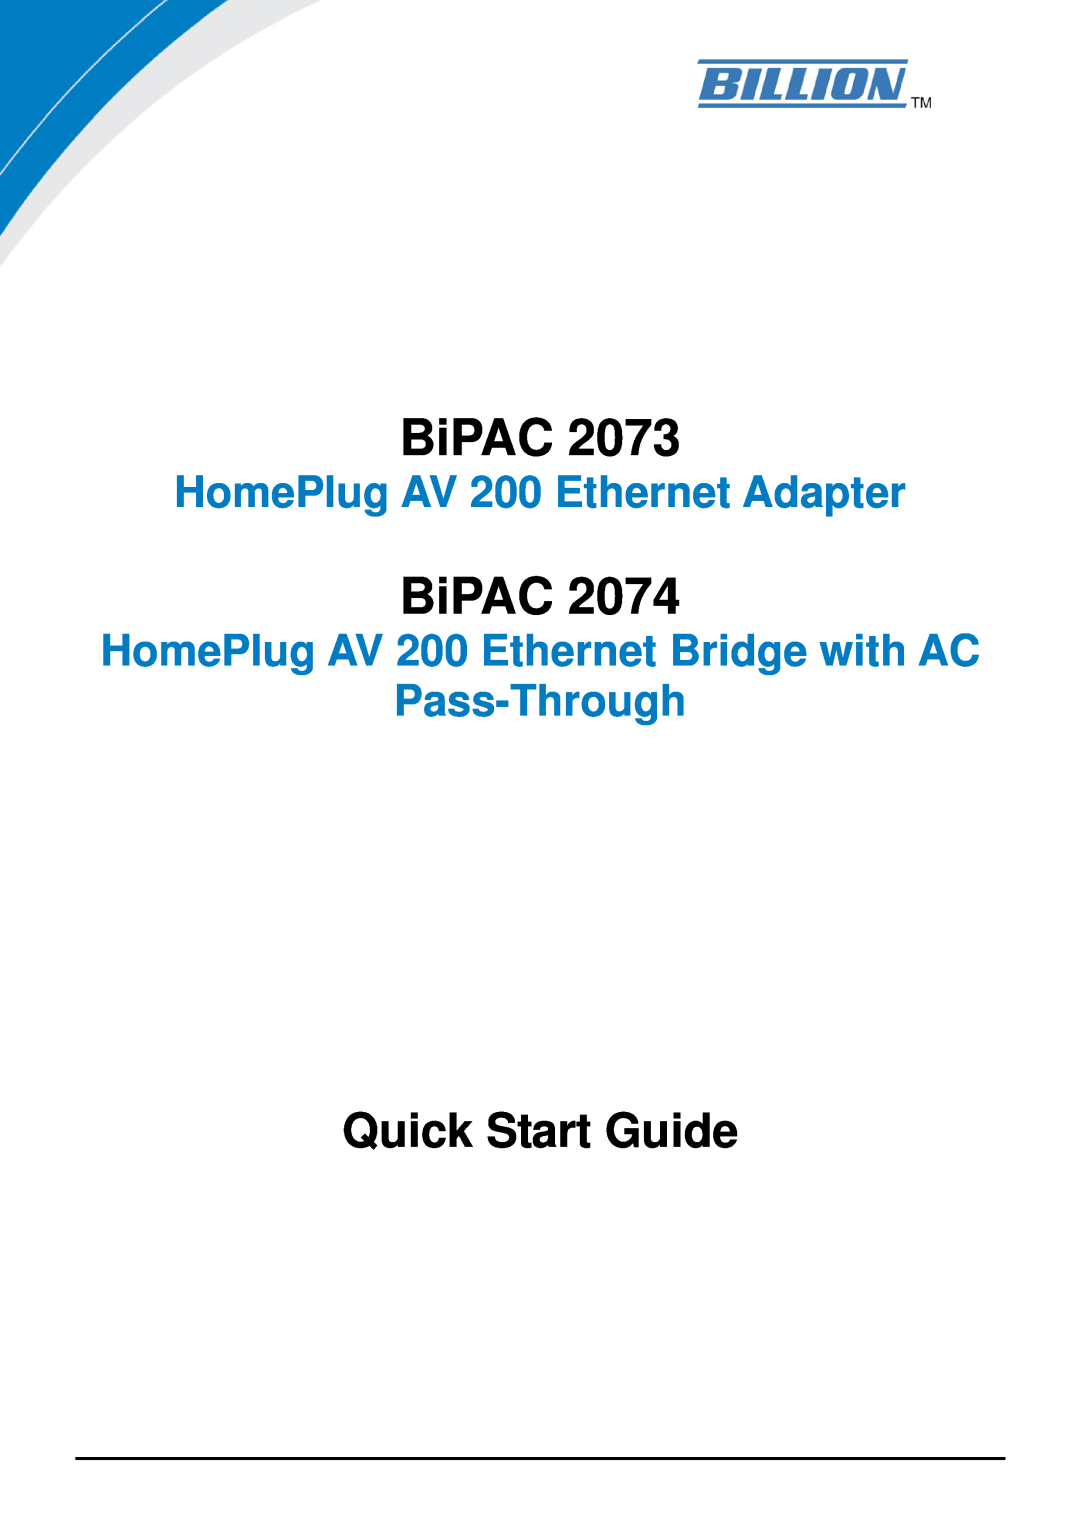 Billion Electric Company BiPAC 2073 quick start Quick Start Guide, HomePlug AV 200 Ethernet Adapter 